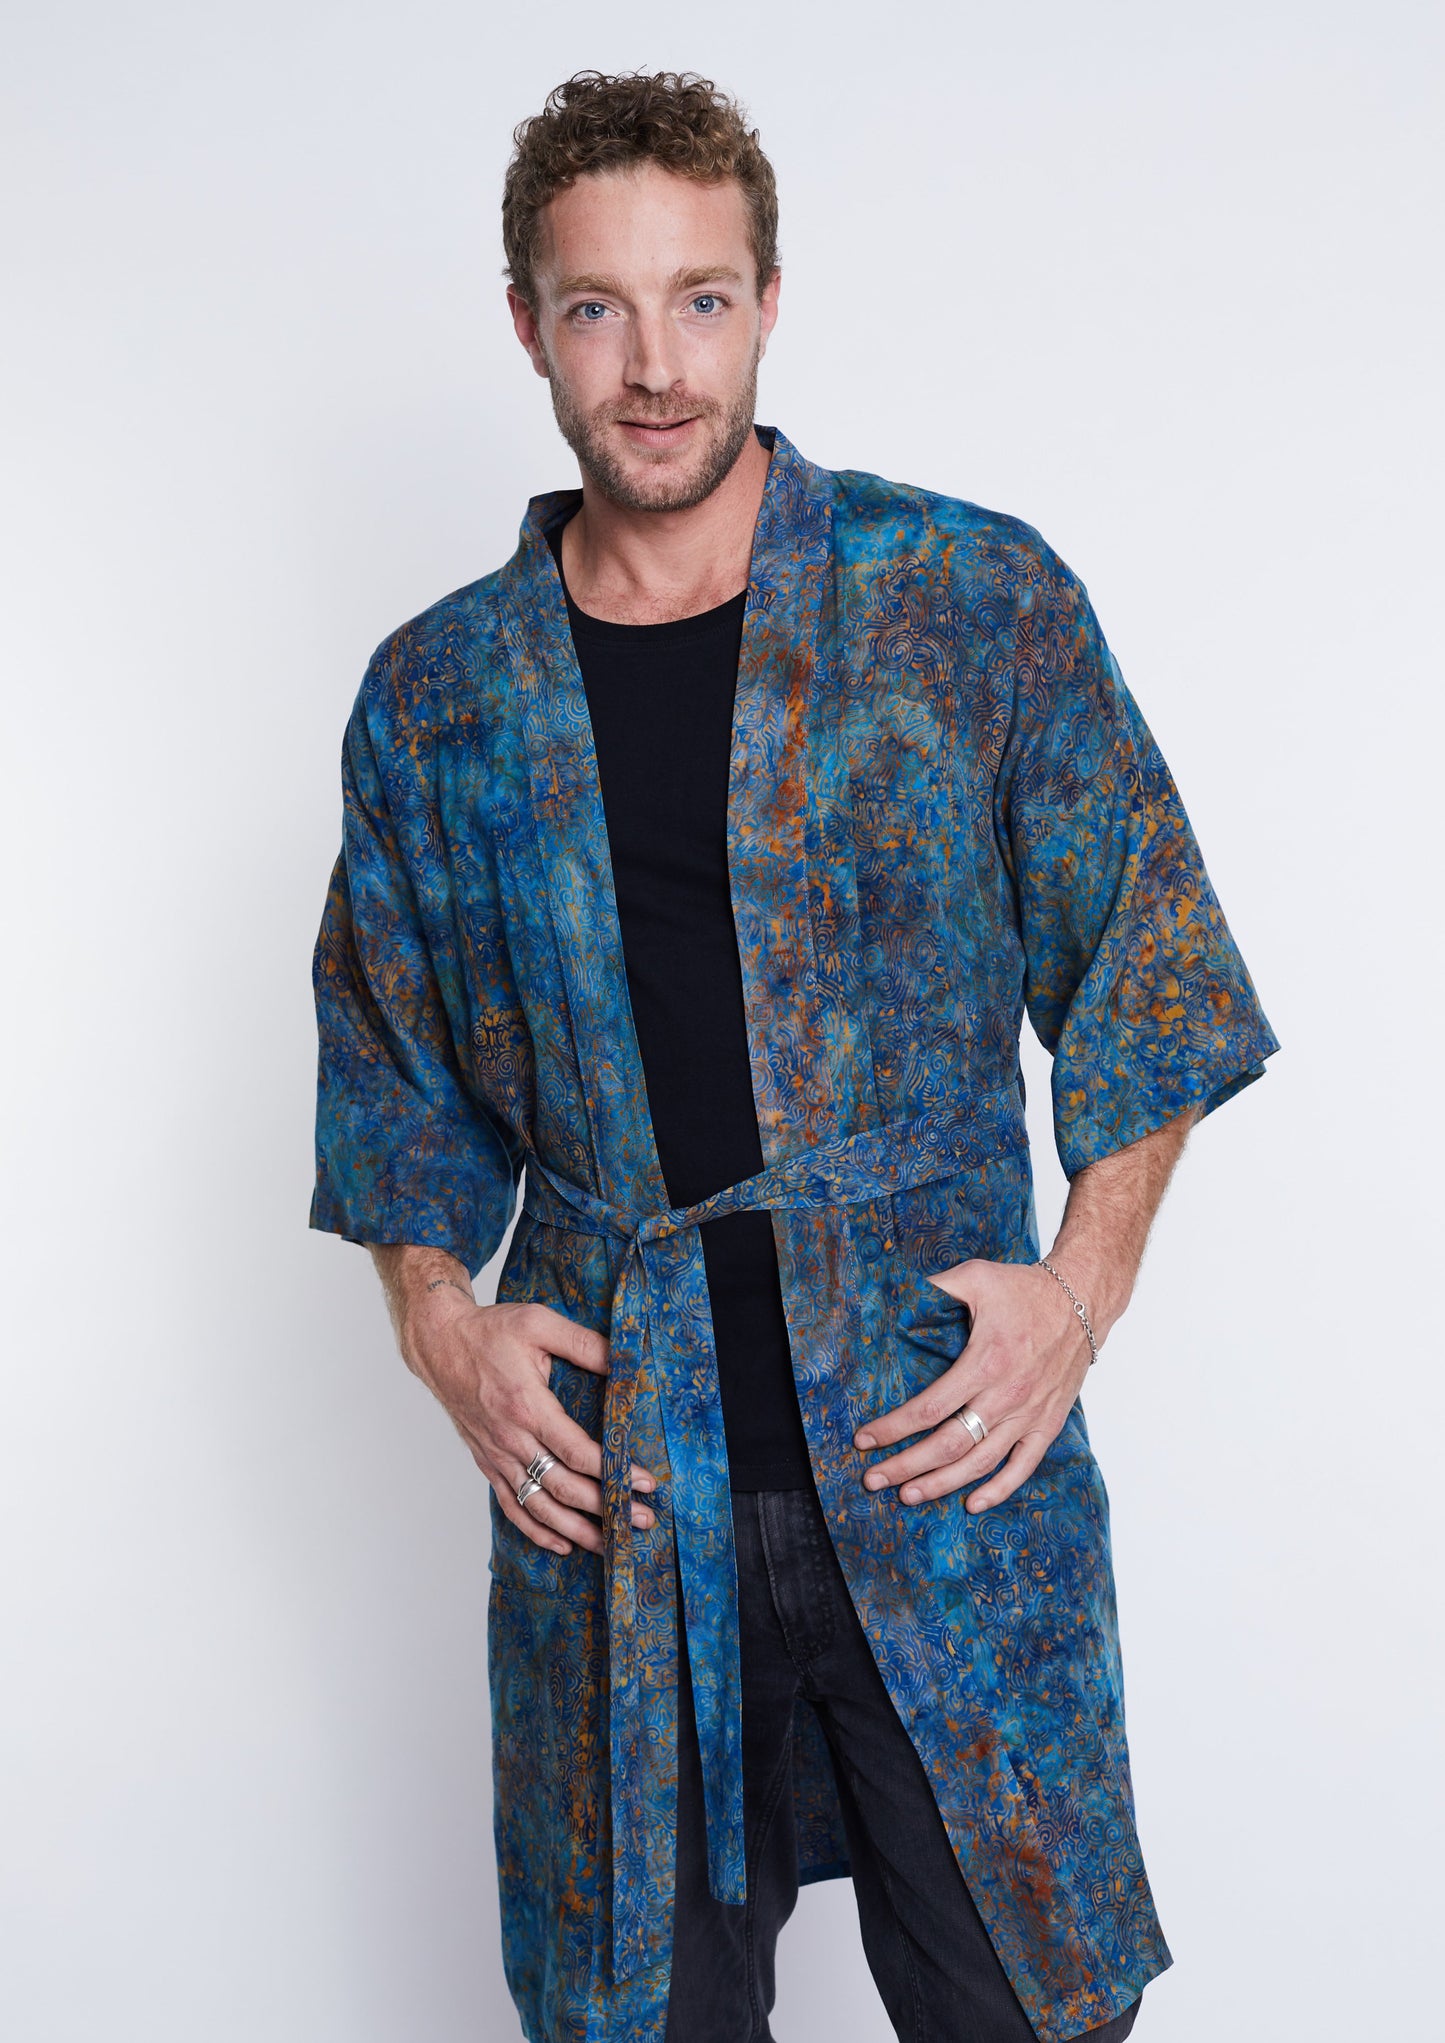 Langer Blue-Orang-Waves handmade Kimono